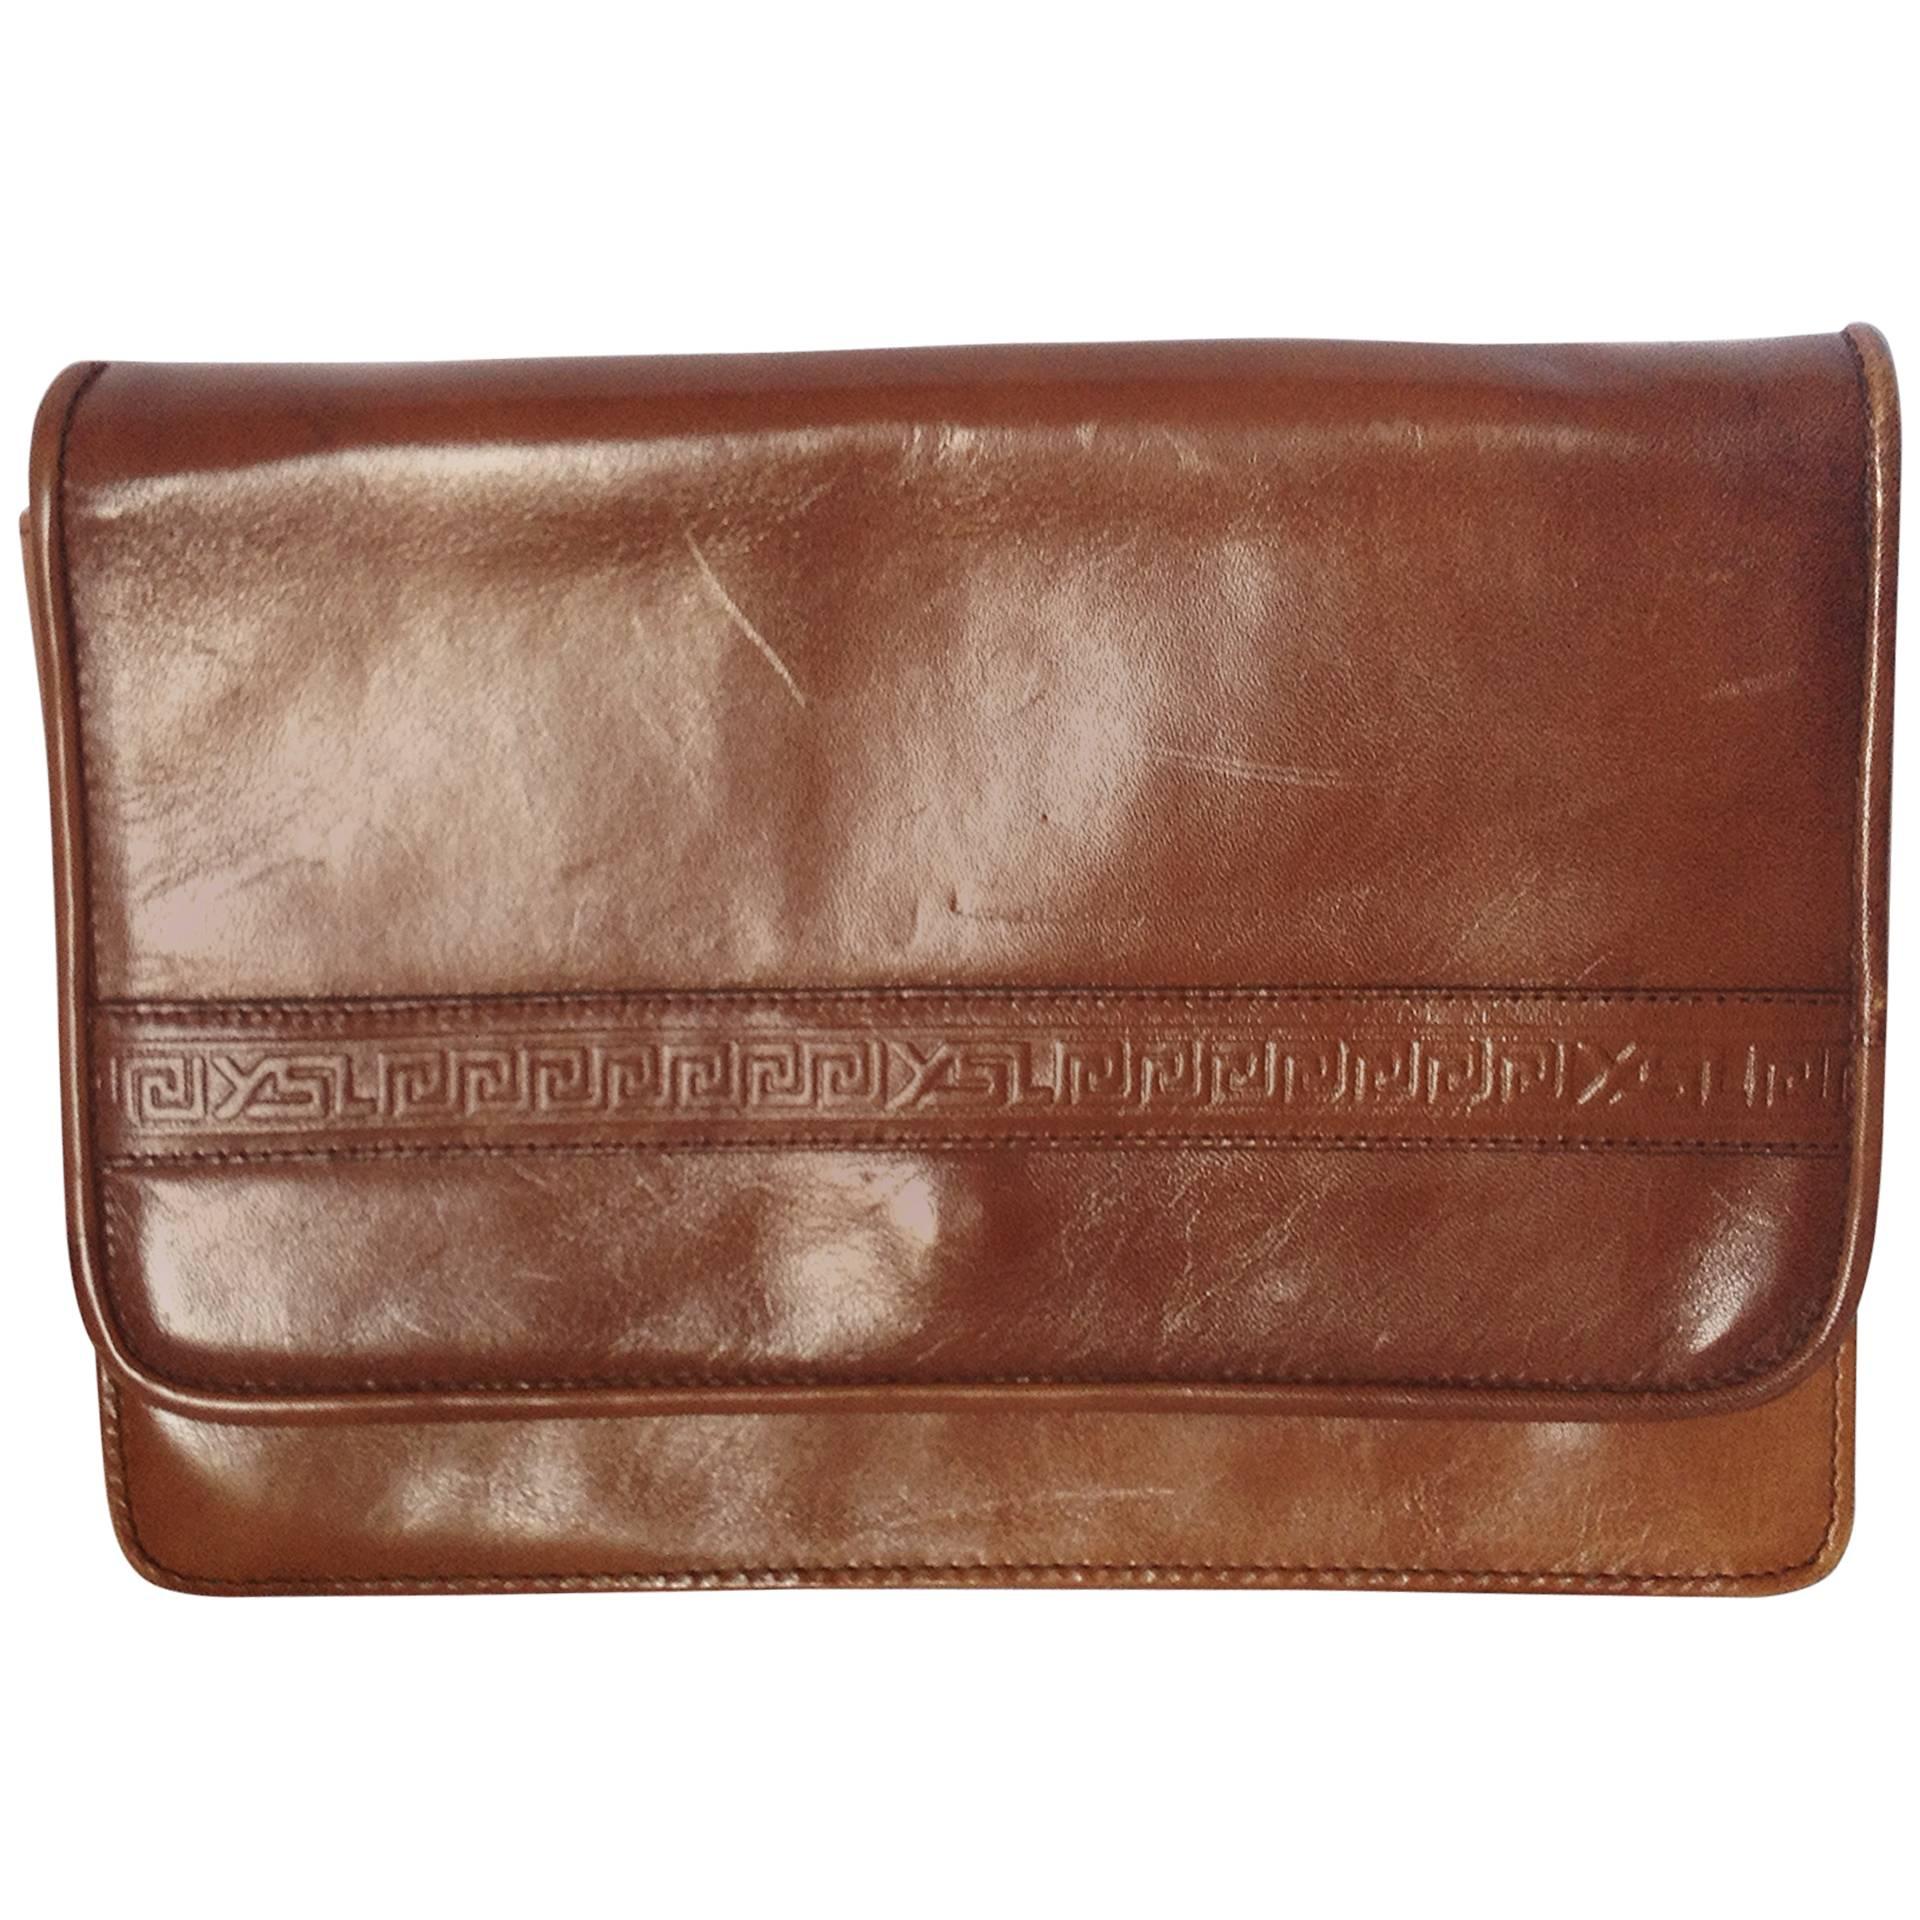 Vintage Yves Saint Laurent genuine brown leather mini document bag, clutch purse For Sale